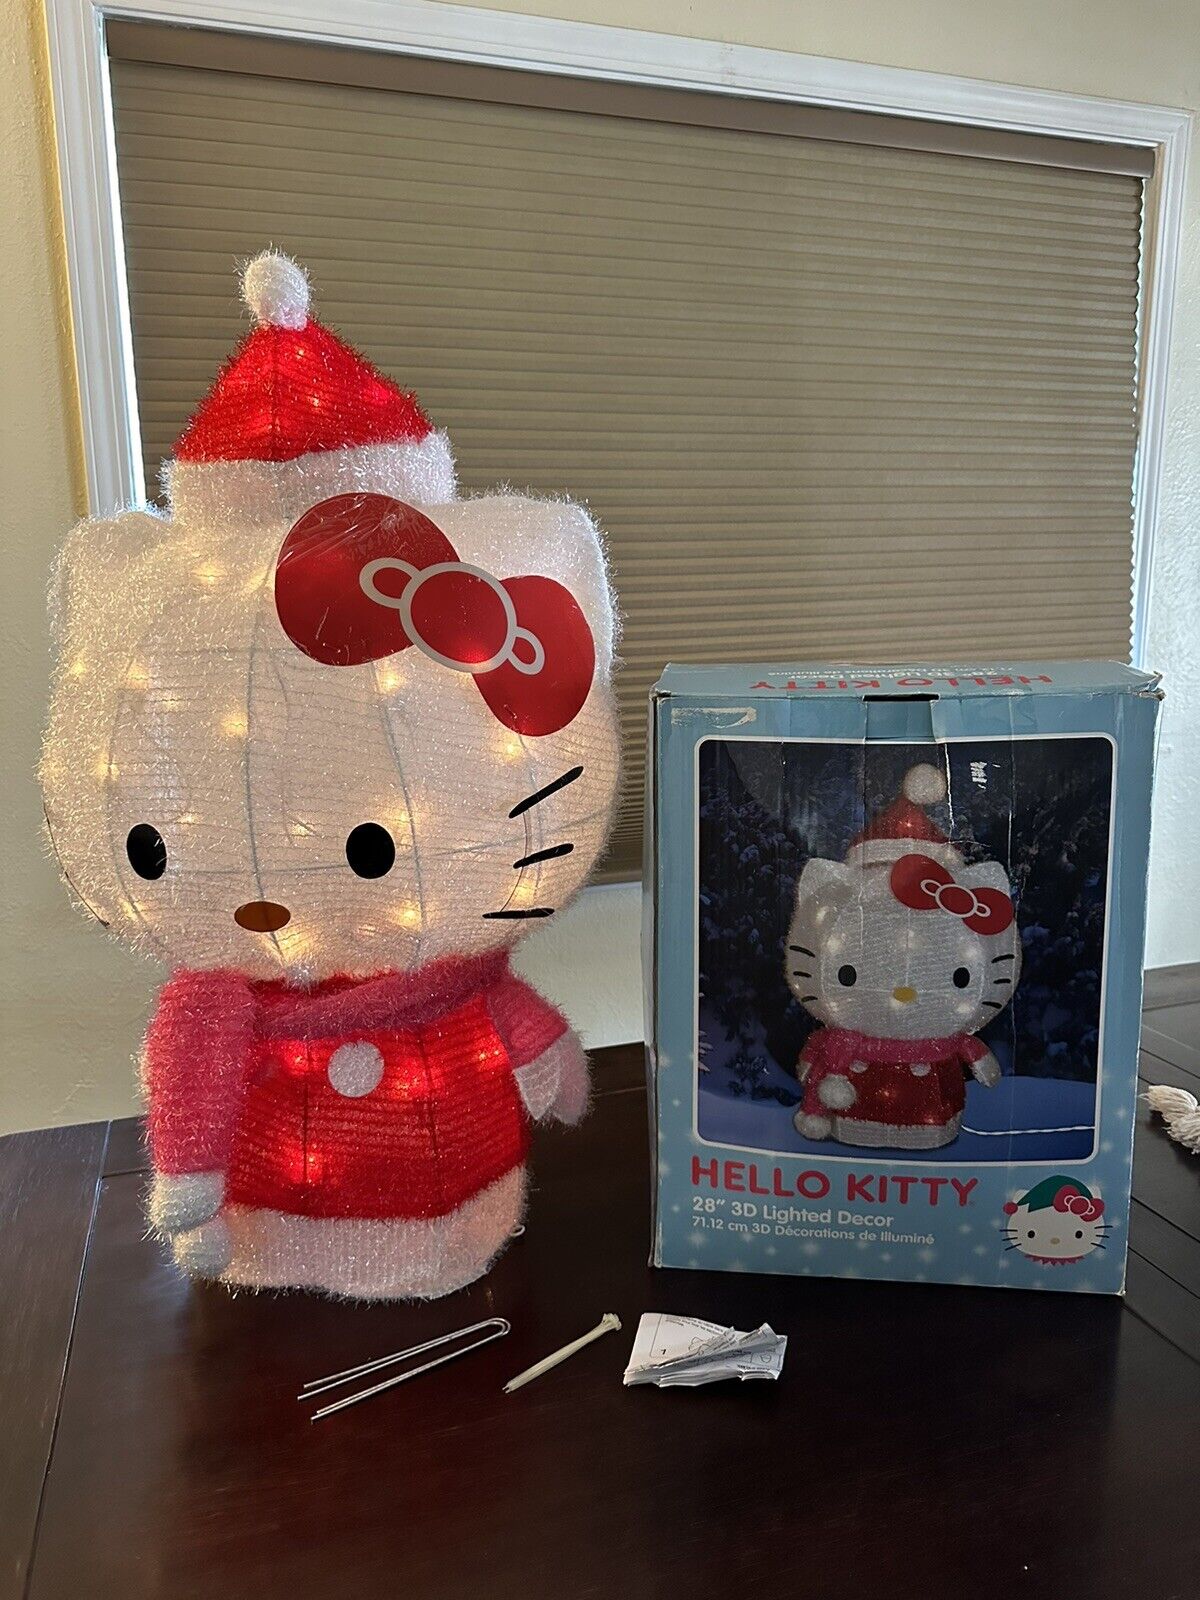 Hello Kitty Christmas 28” 3D Lighted Holiday Decor Jumbo Rare Kurt Adler 2012